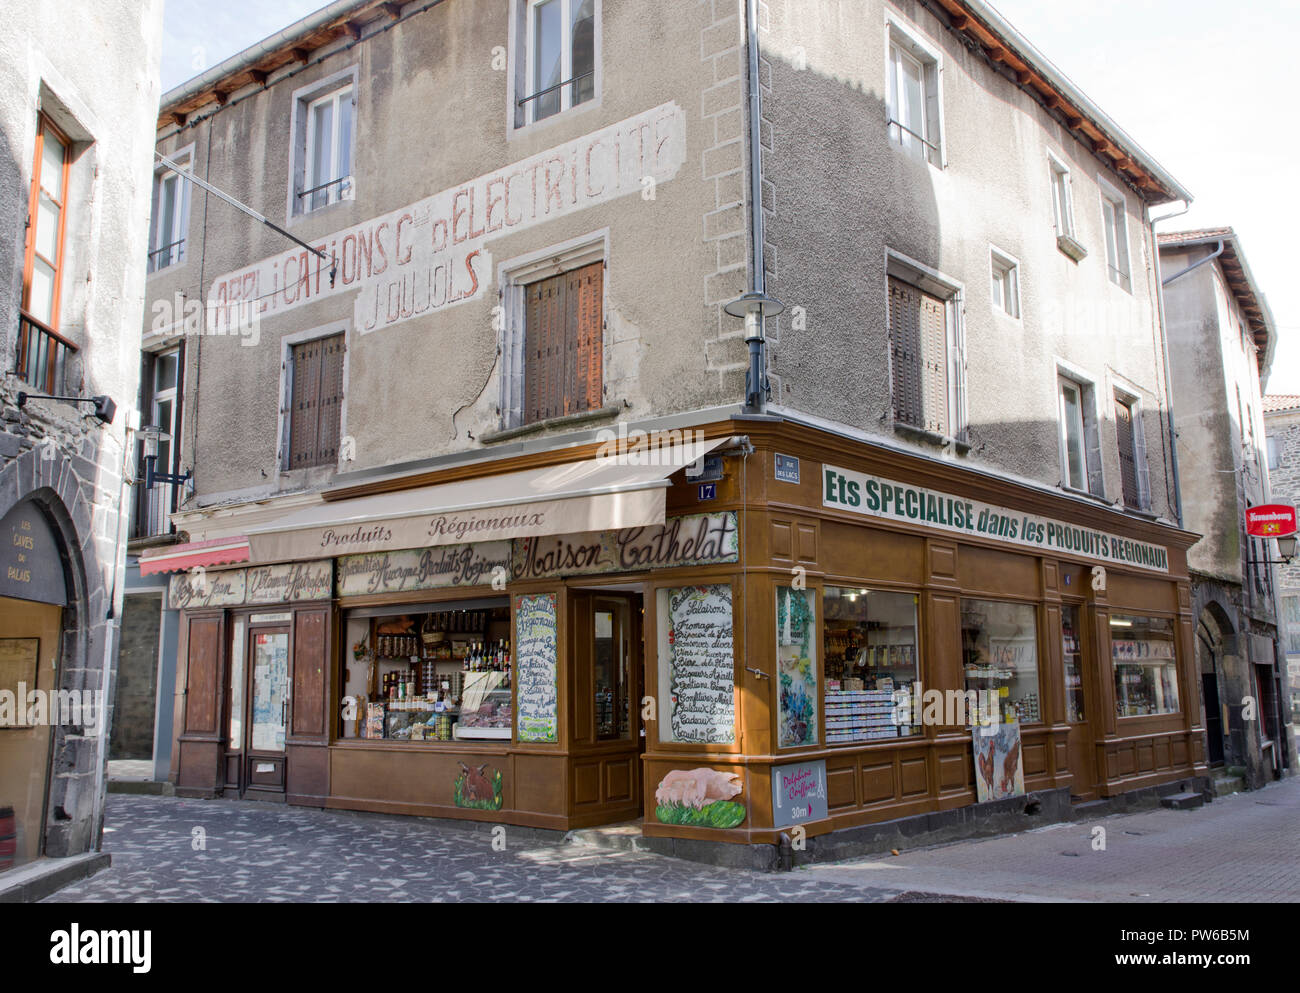 Delicatessen St Flour France Stock Photo